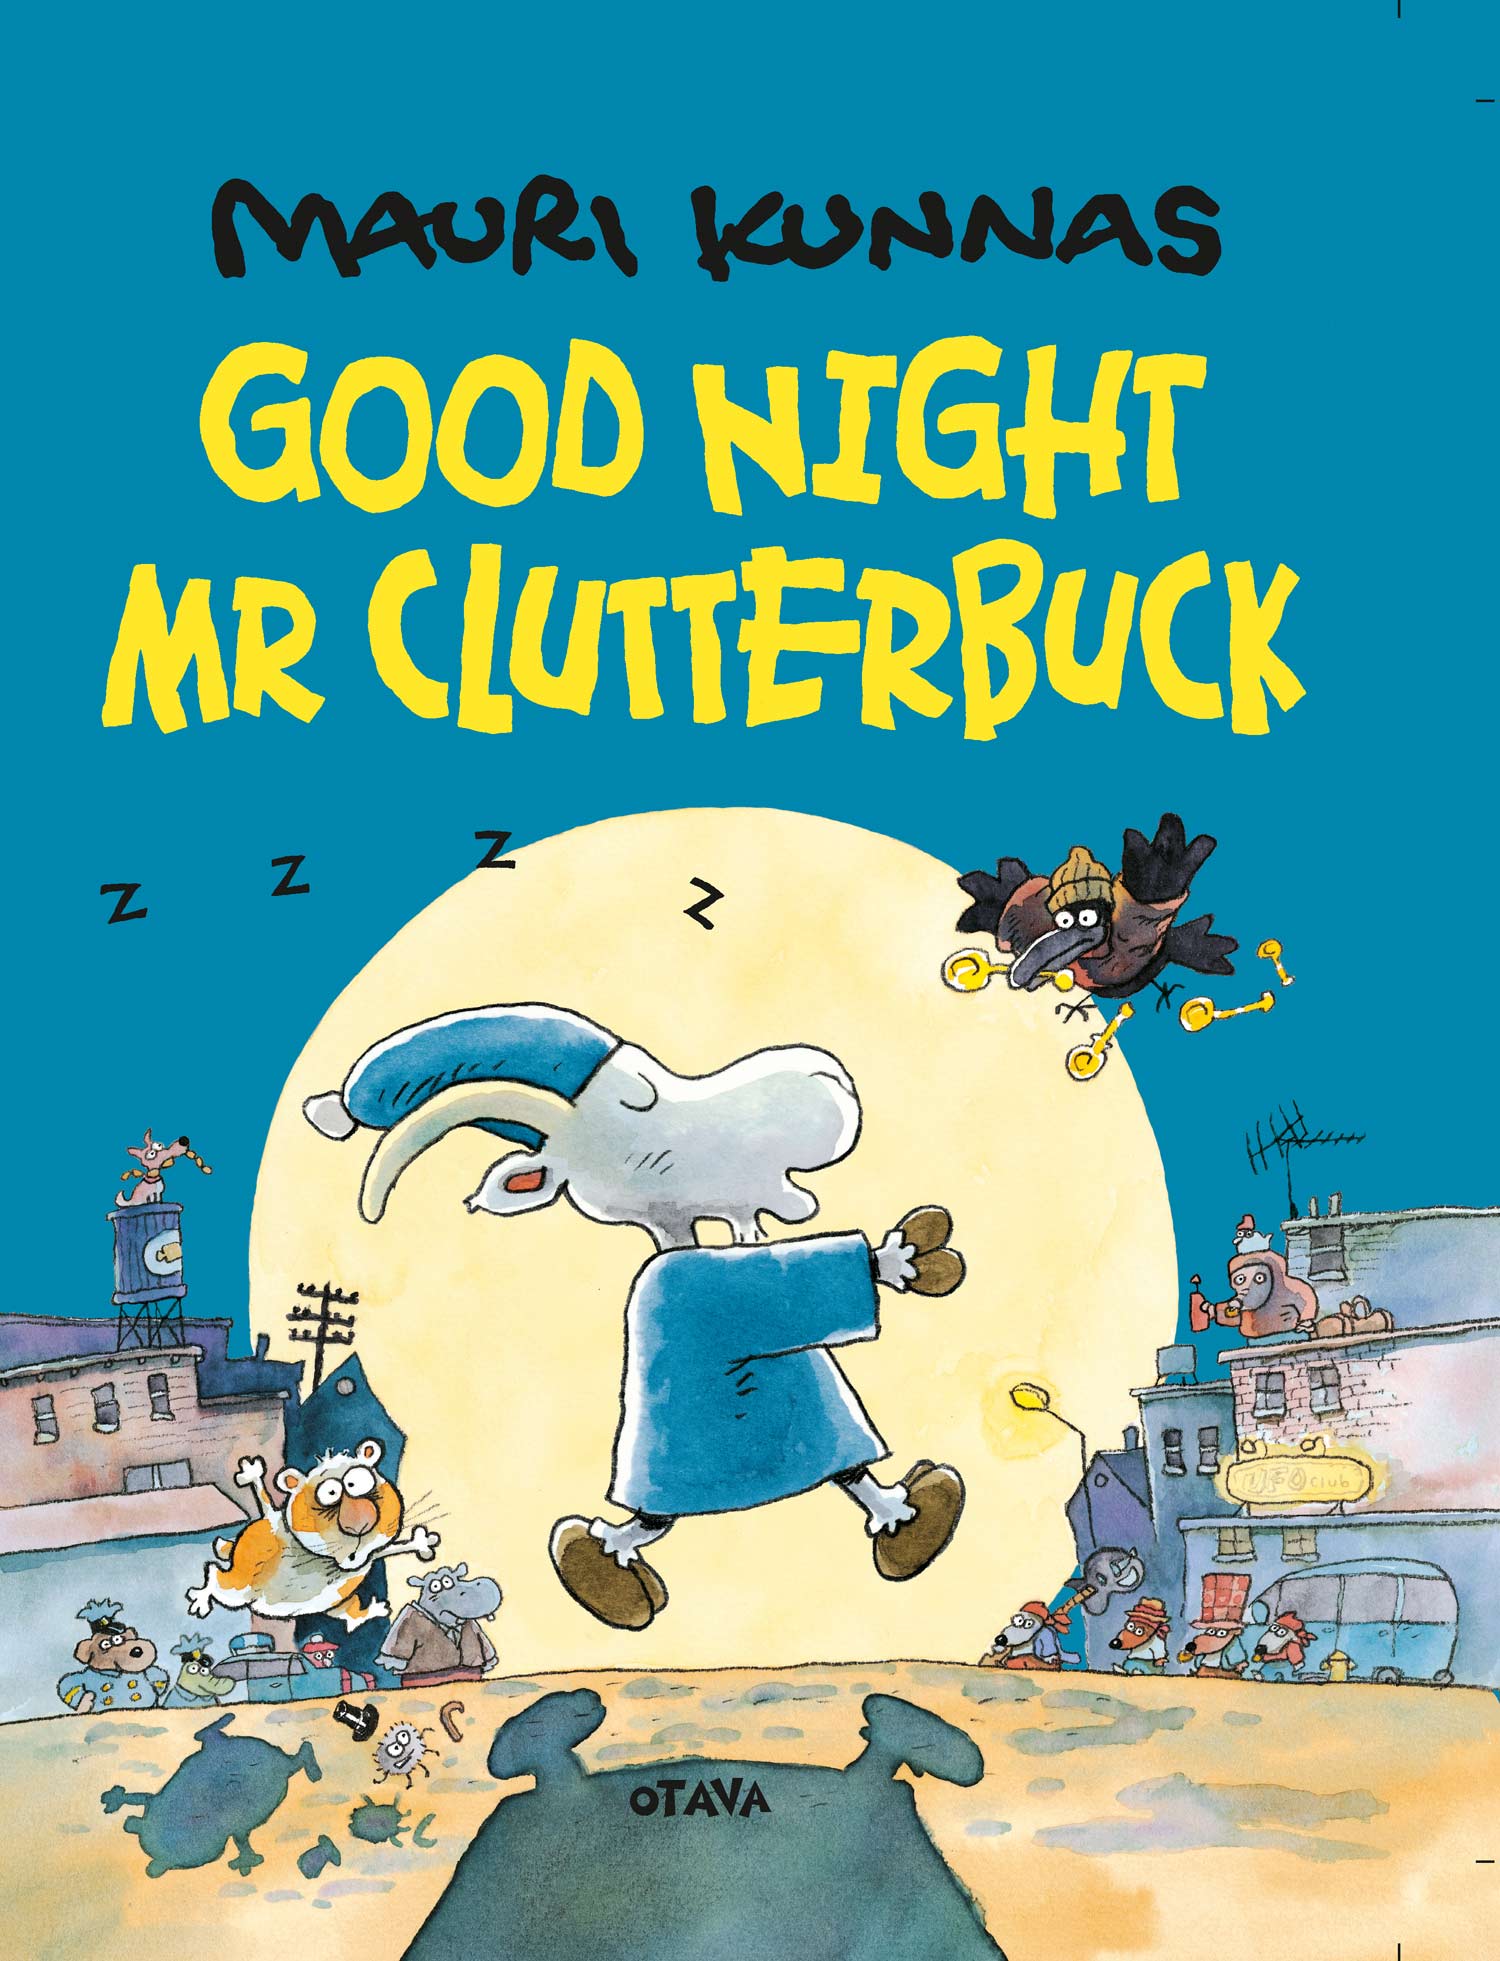 Goodnight Mr. Clutterbuck